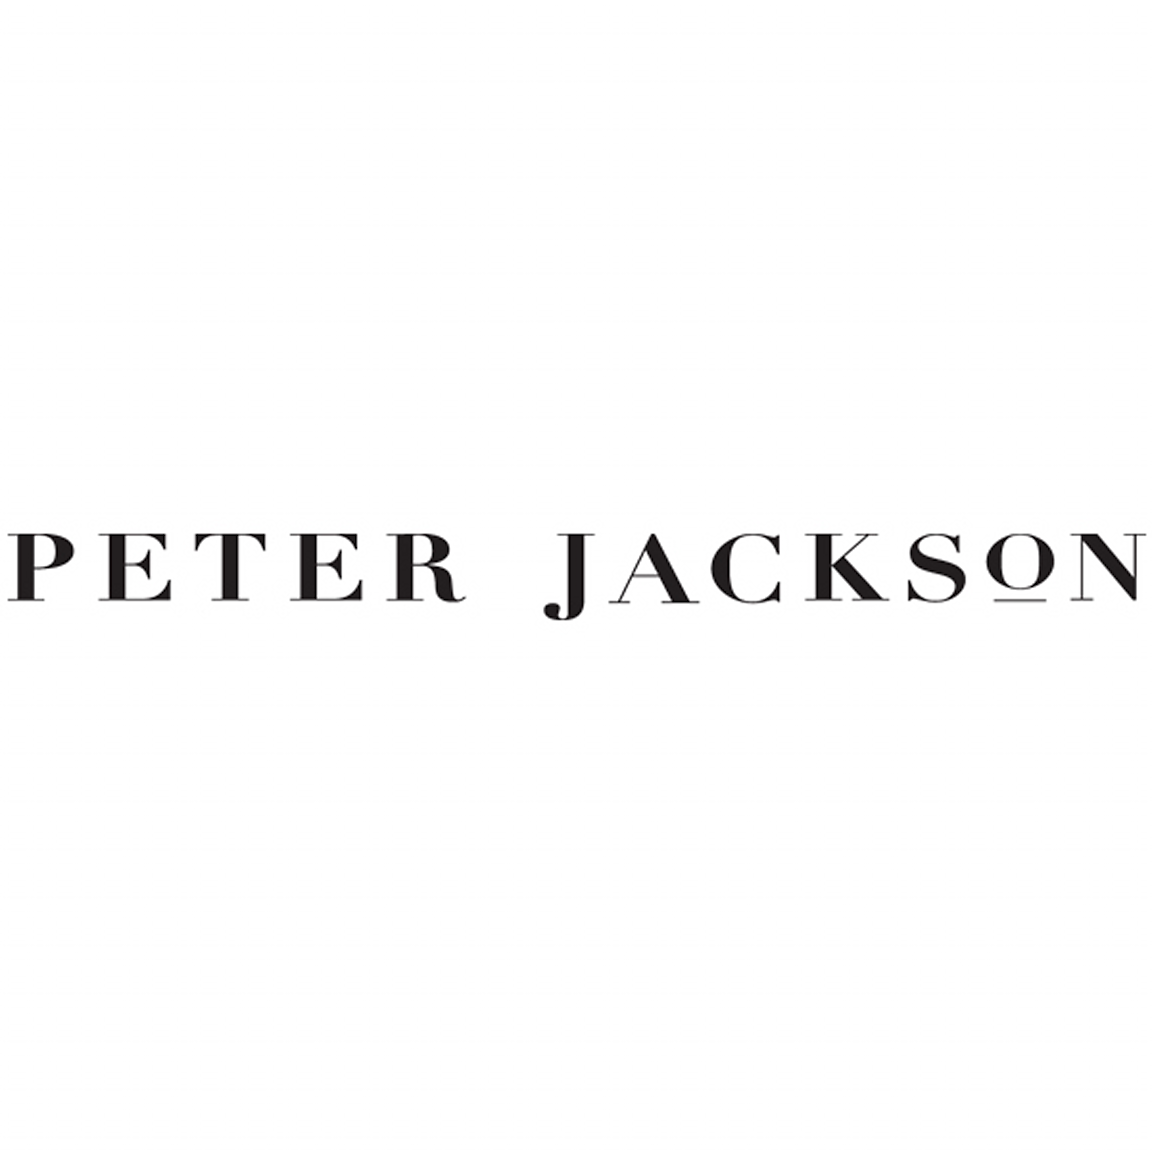 peter-jackson-logo